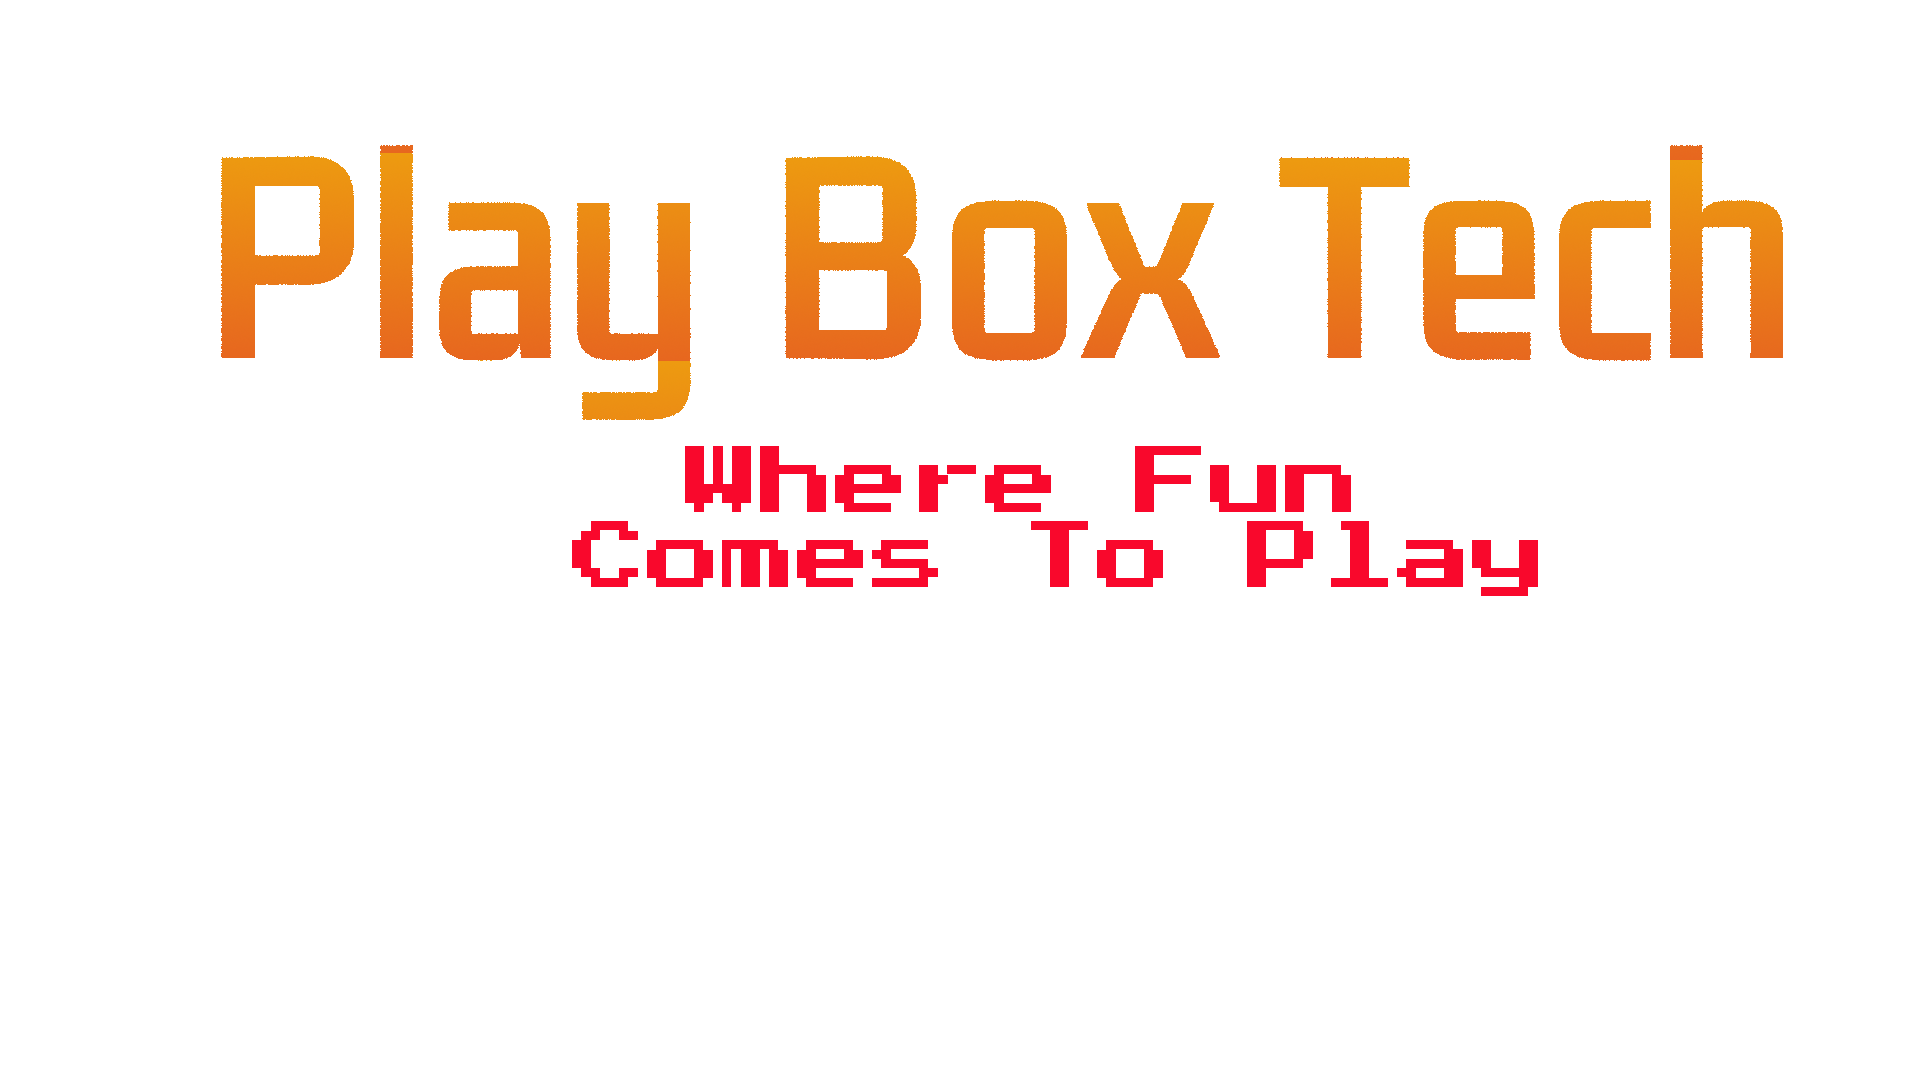 PlayBox Tech